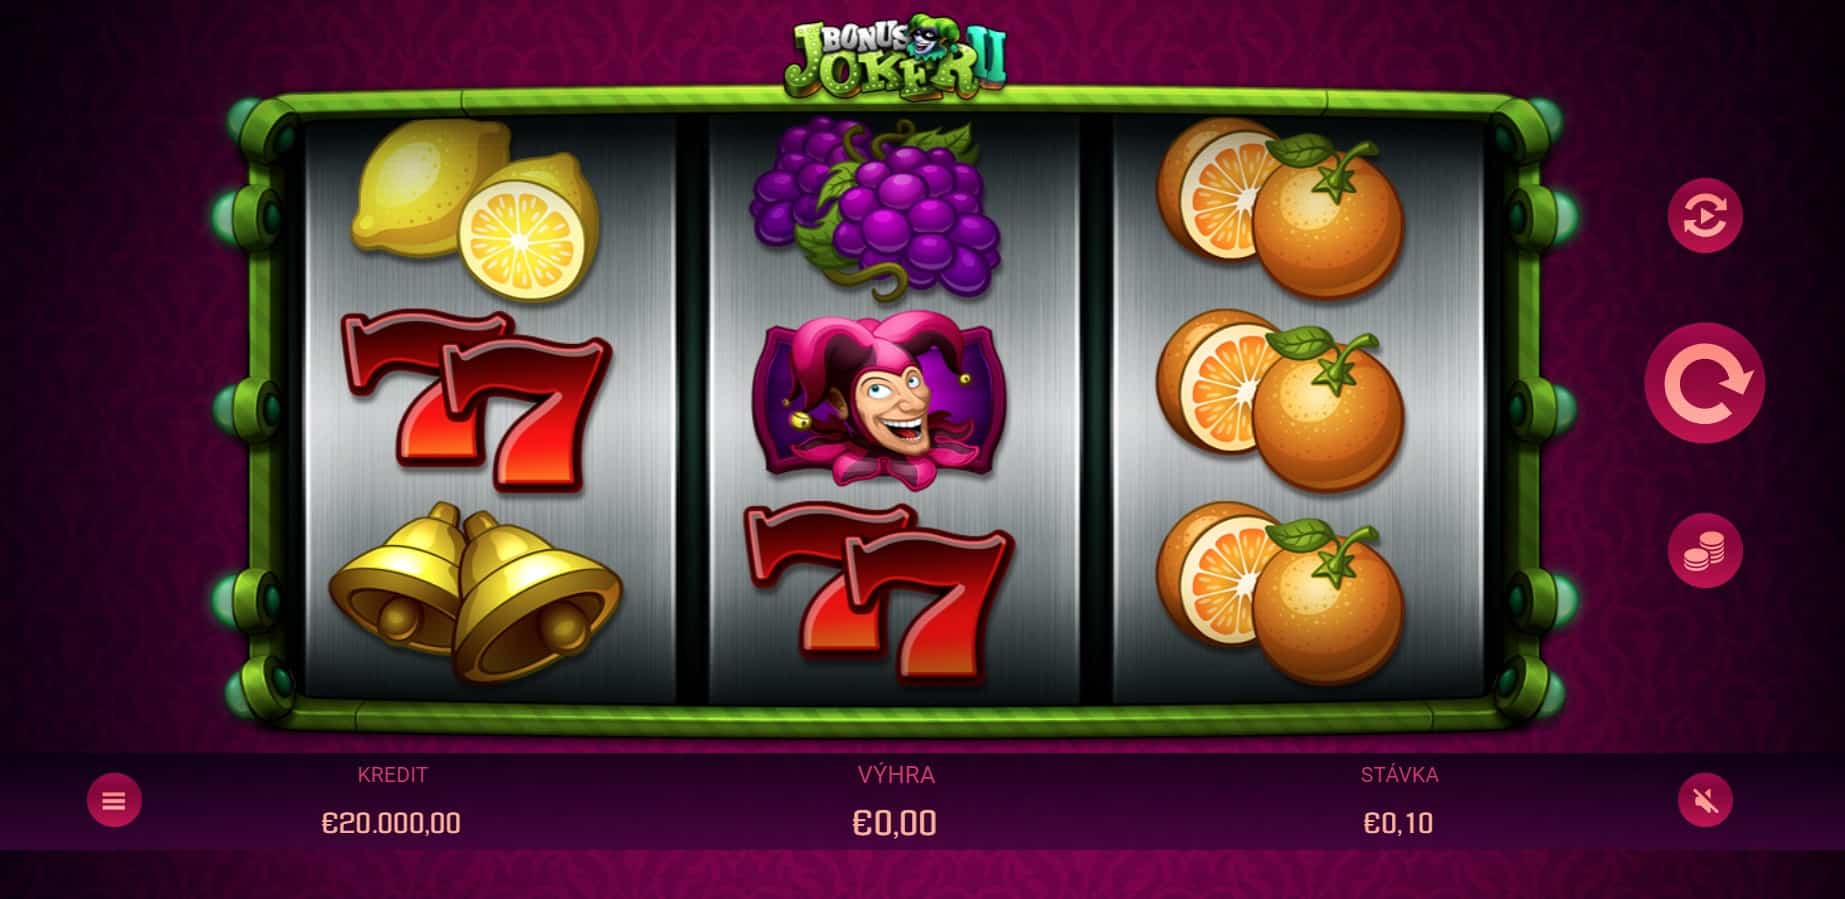 Herný automat Bonus Joker II - ako hrať daný automat